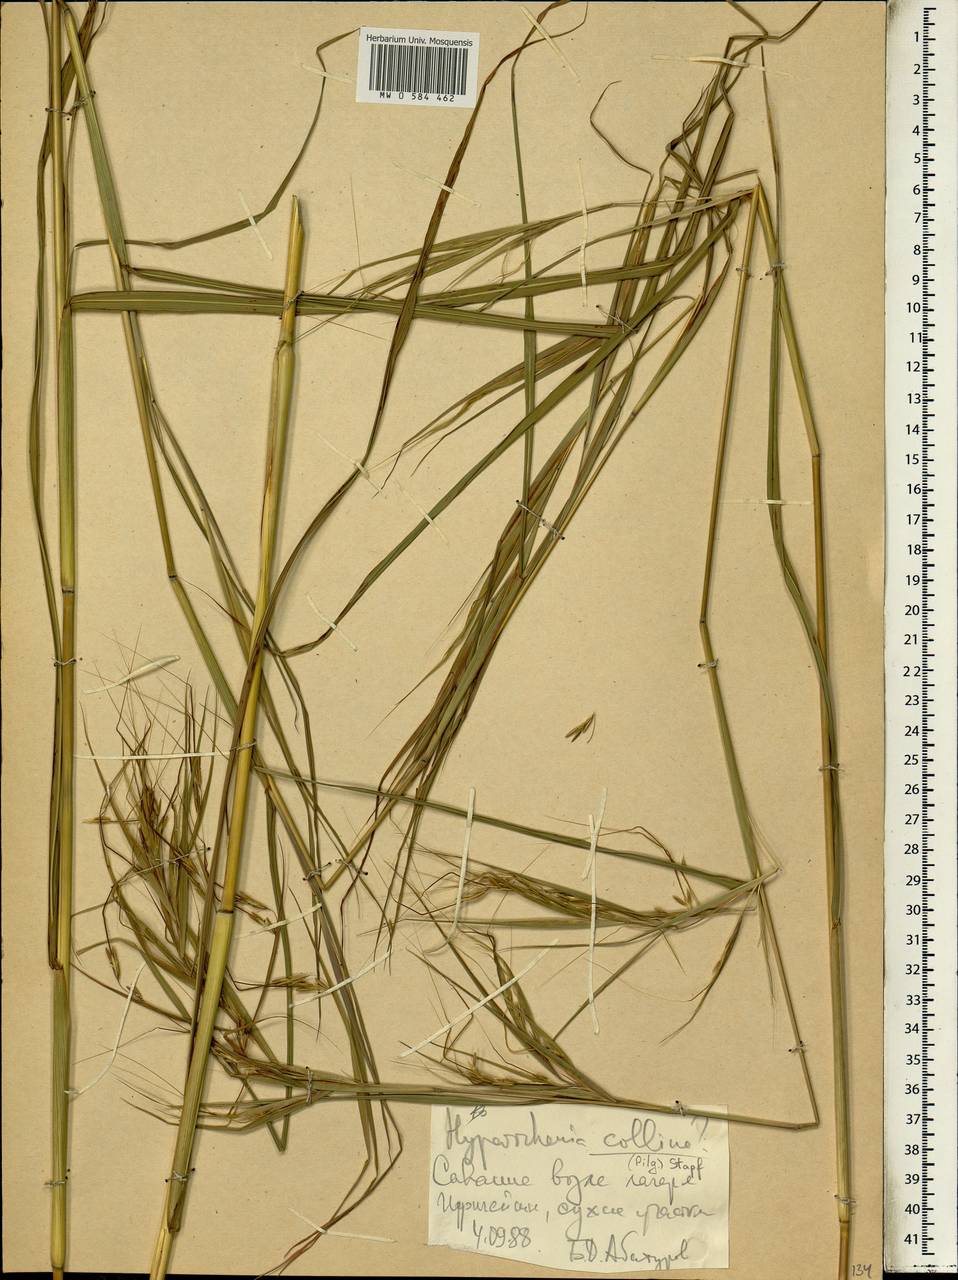 Hyparrhenia collina (Pilg.) Stapf, Africa (AFR) (Ethiopia)